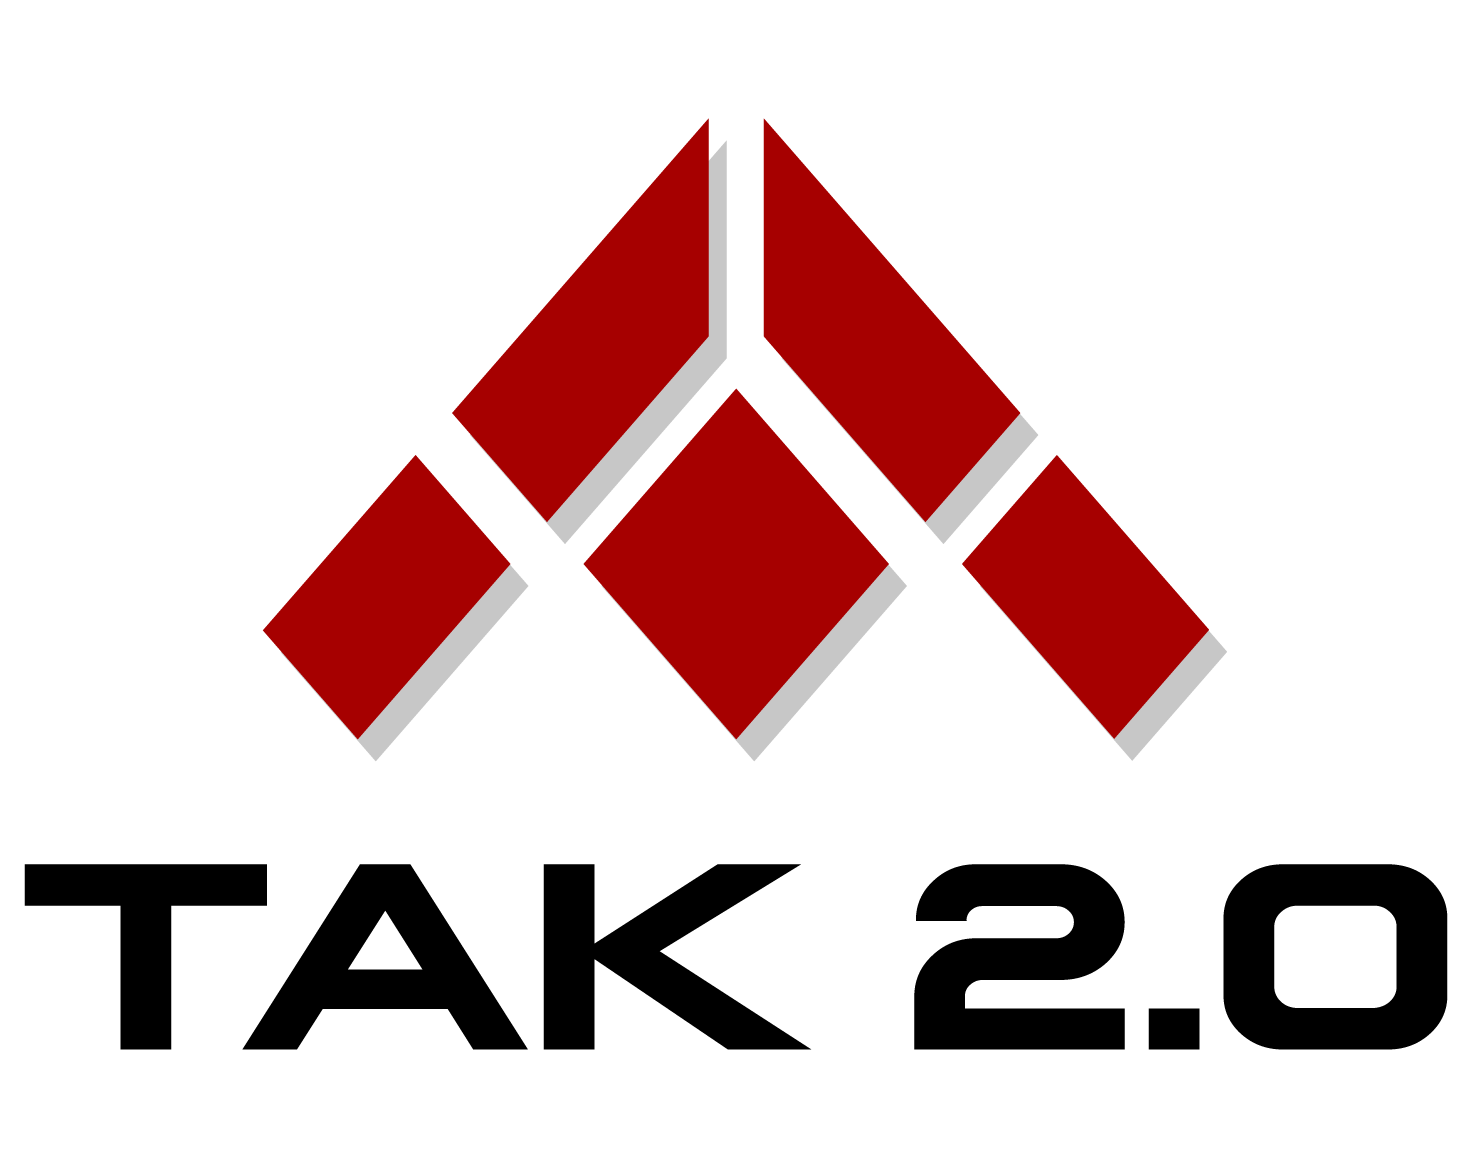 Tak2.0 logo